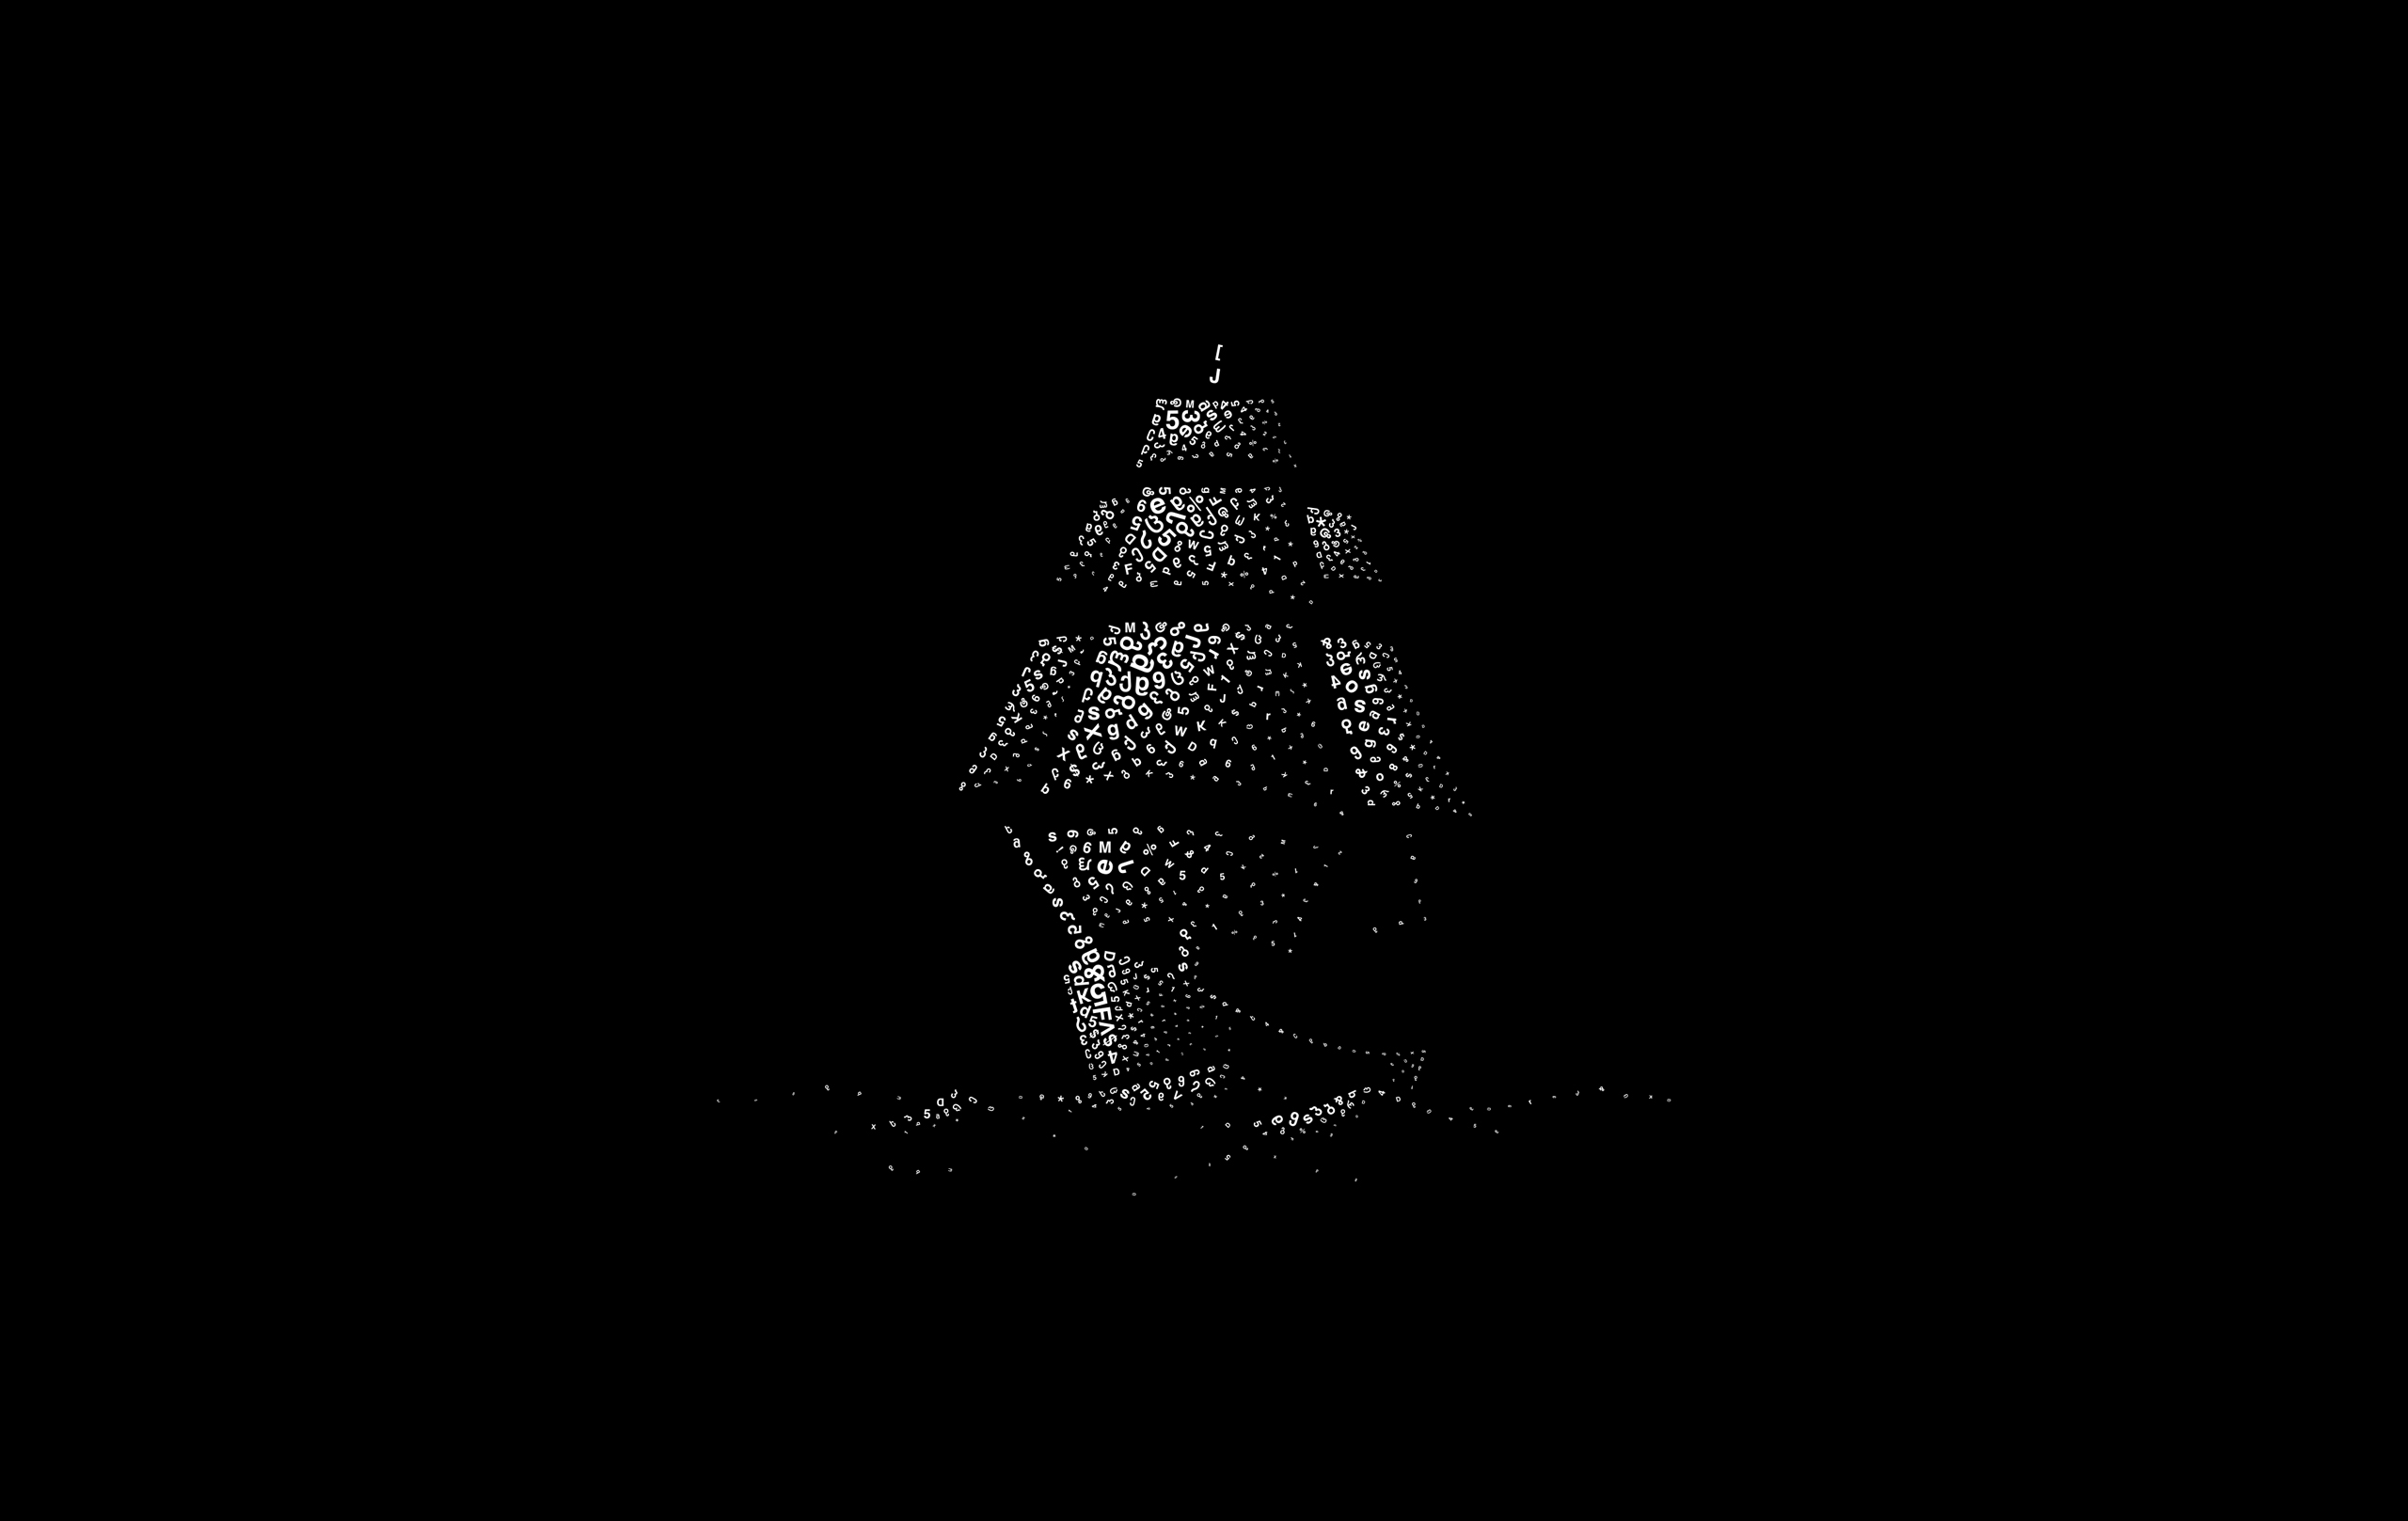 General 2560x1617 black background minimalism digital art ship monochrome numbers rigging (ship) sailing ship waves simple background